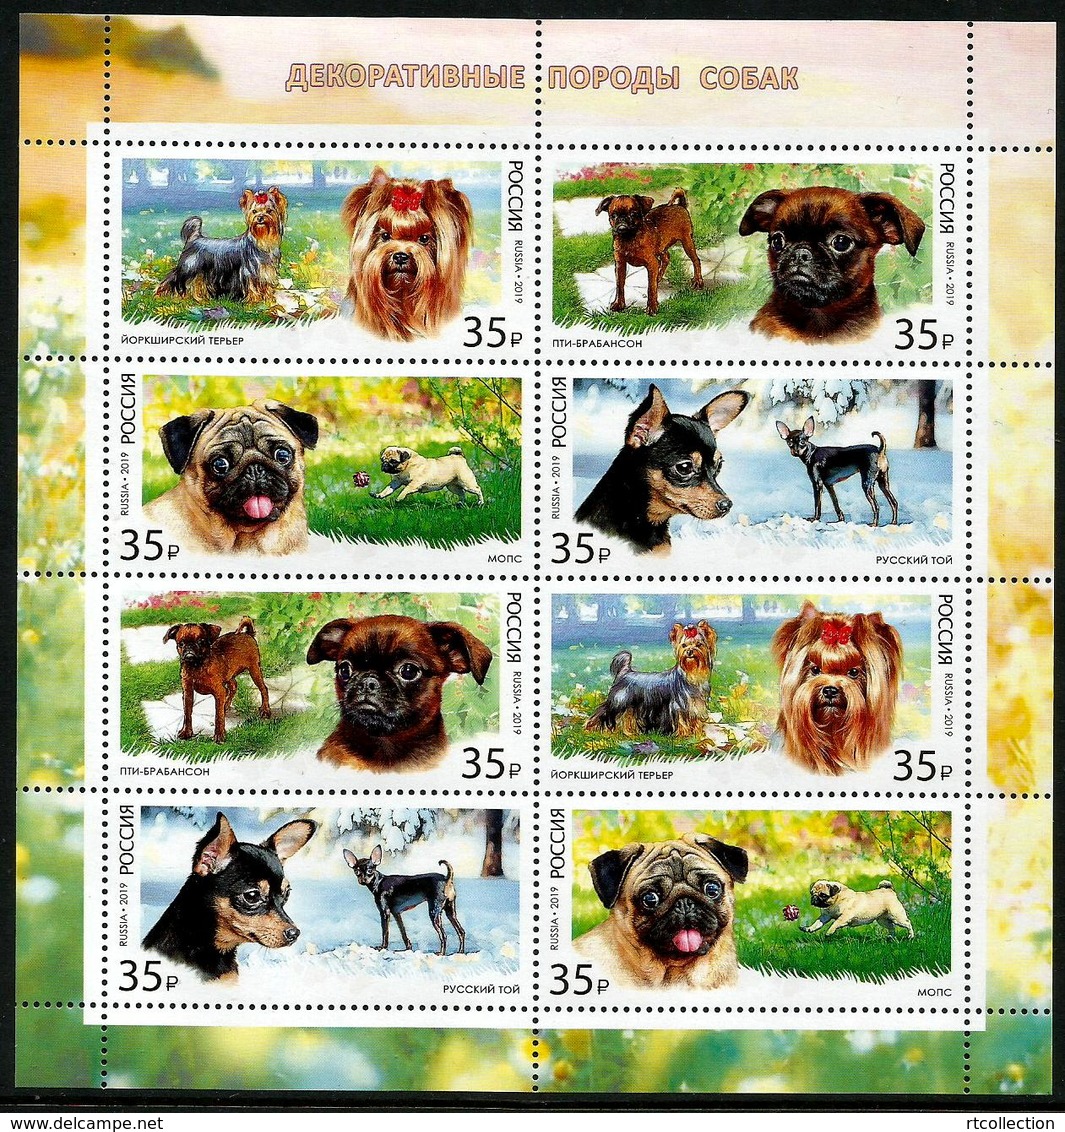 Russia 2019 Sheet Decorative Toy Dogs Dog Animals Fauna Mammals Nature Animal Mammal Stamps MNH - Full Sheets